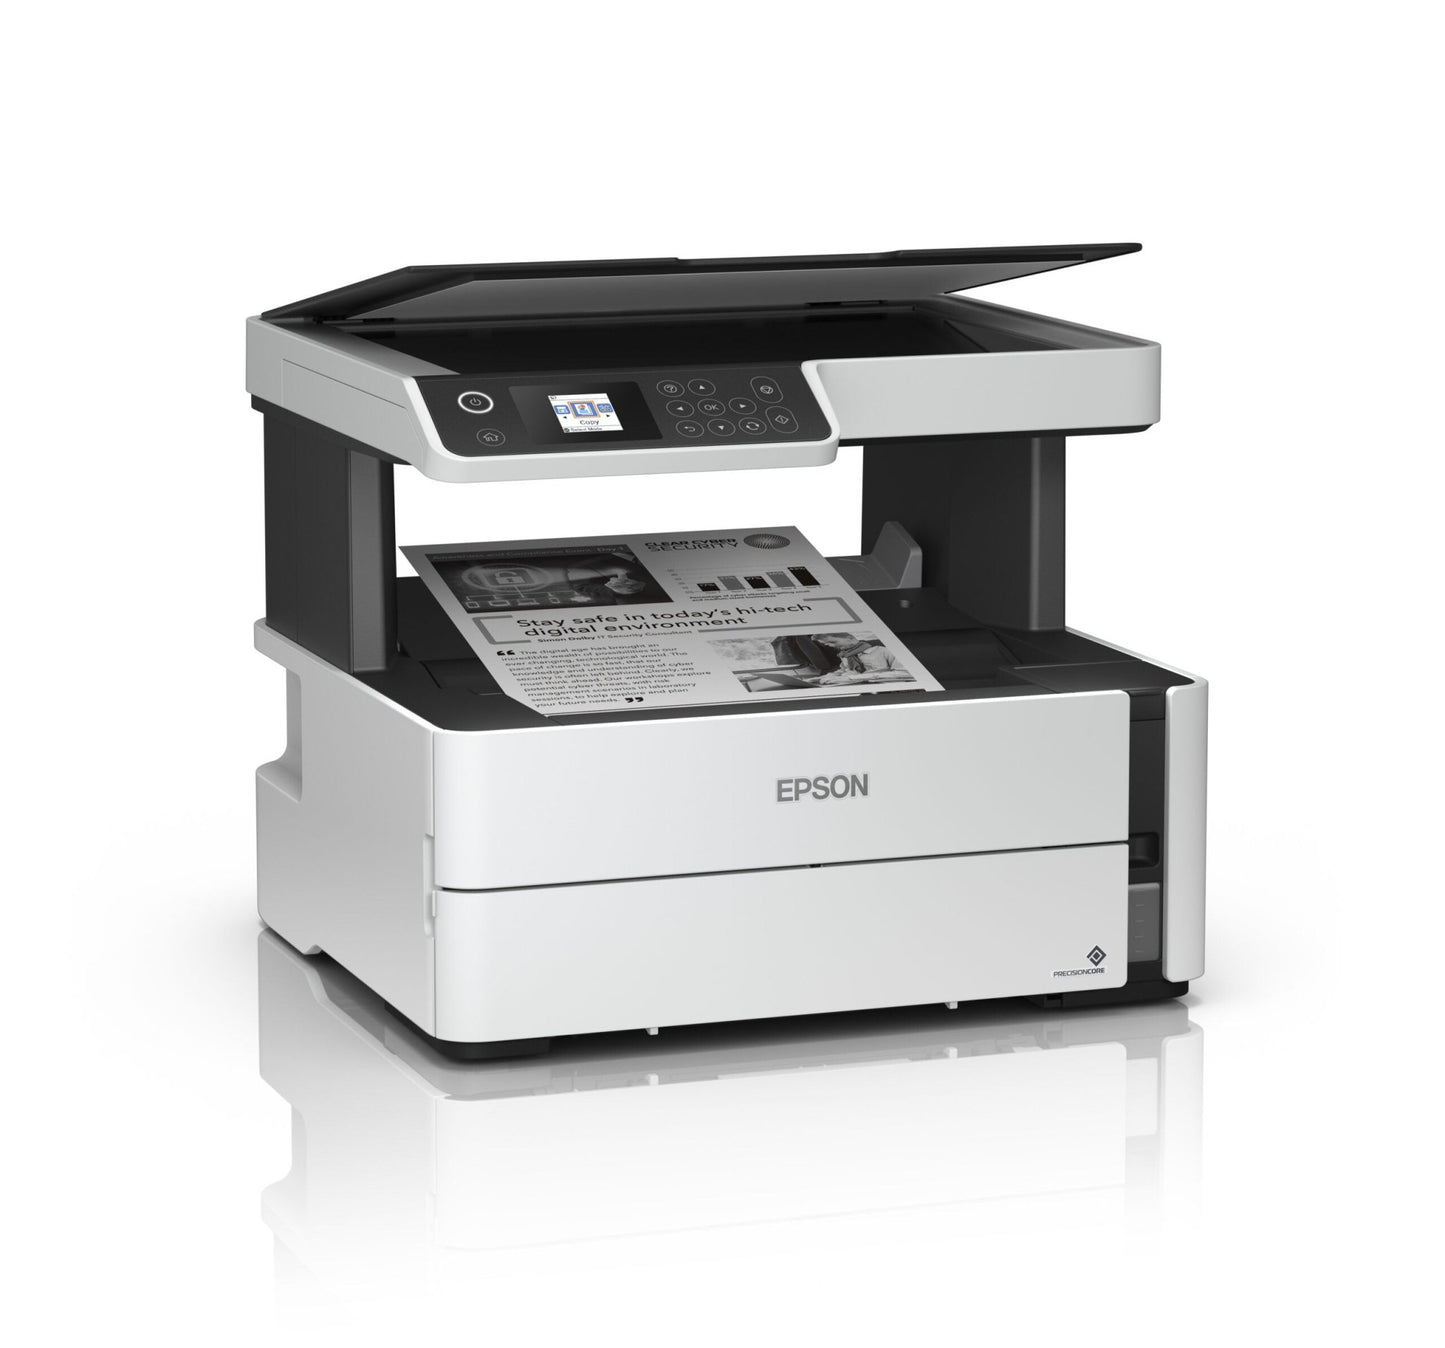 Epson M2170 Ink tank Printer - Vertexhub Shop-epson